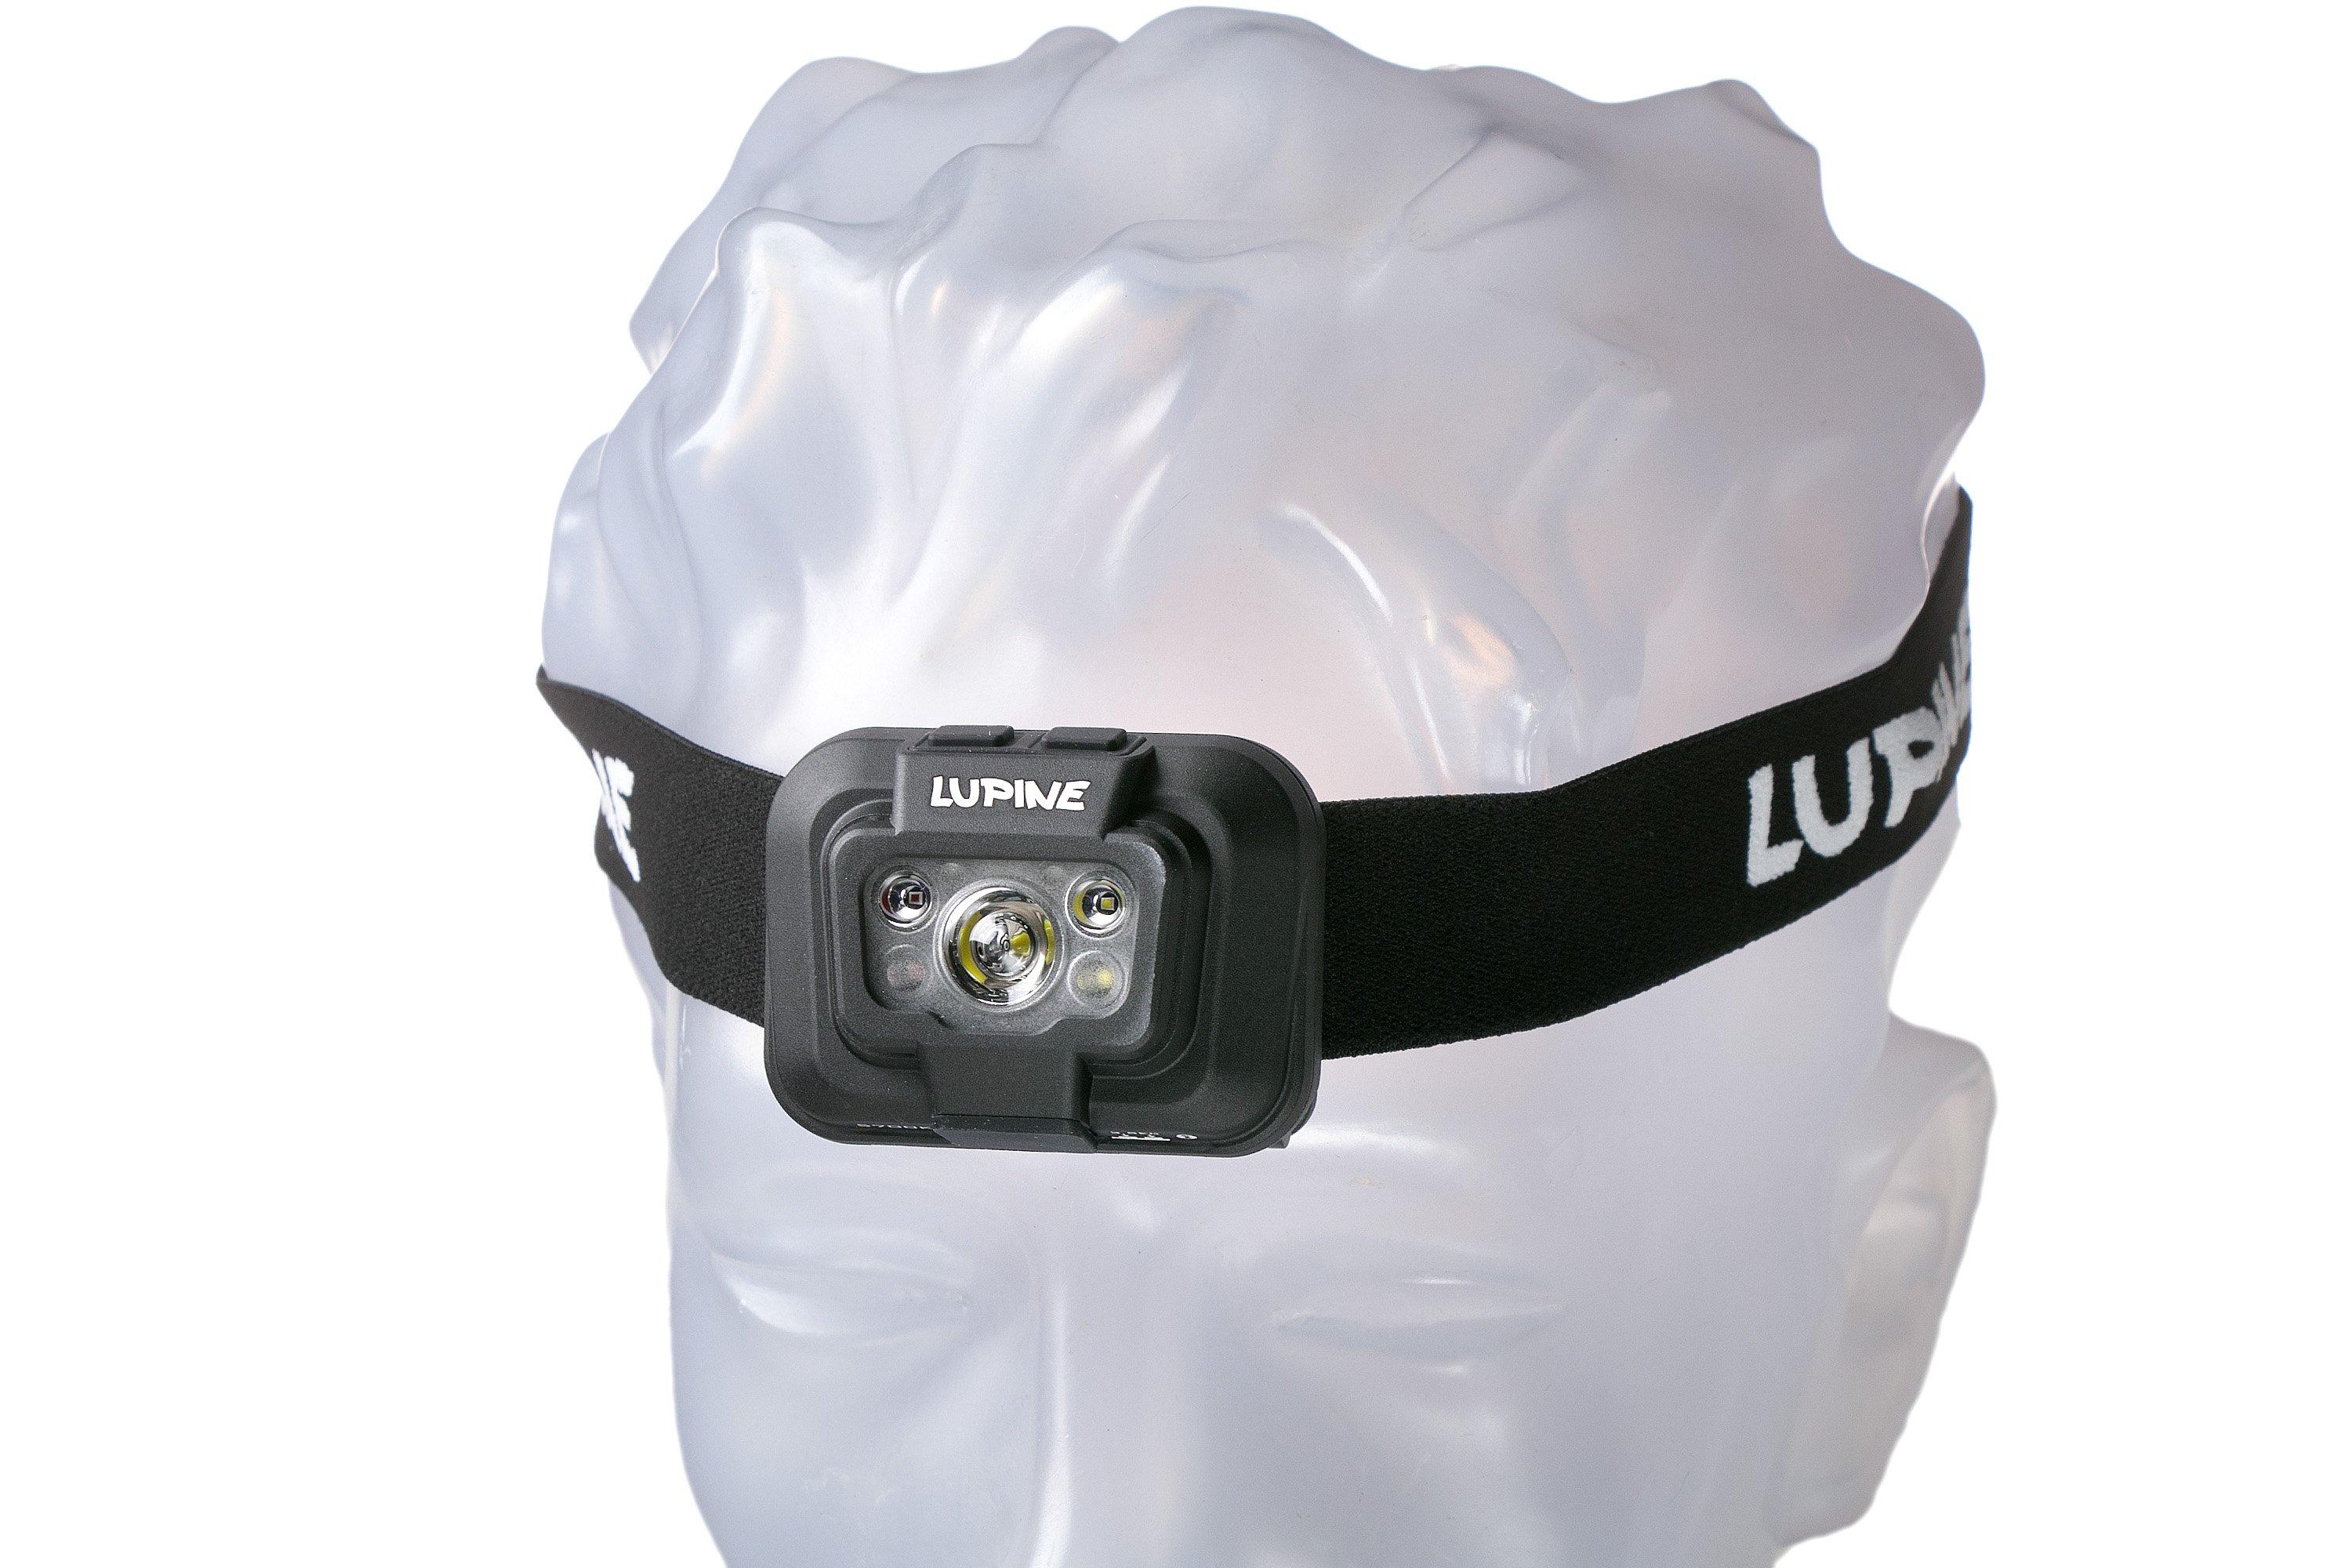 Lupine Penta 5700K head torch ,1200 lumens  Advantageously shopping at